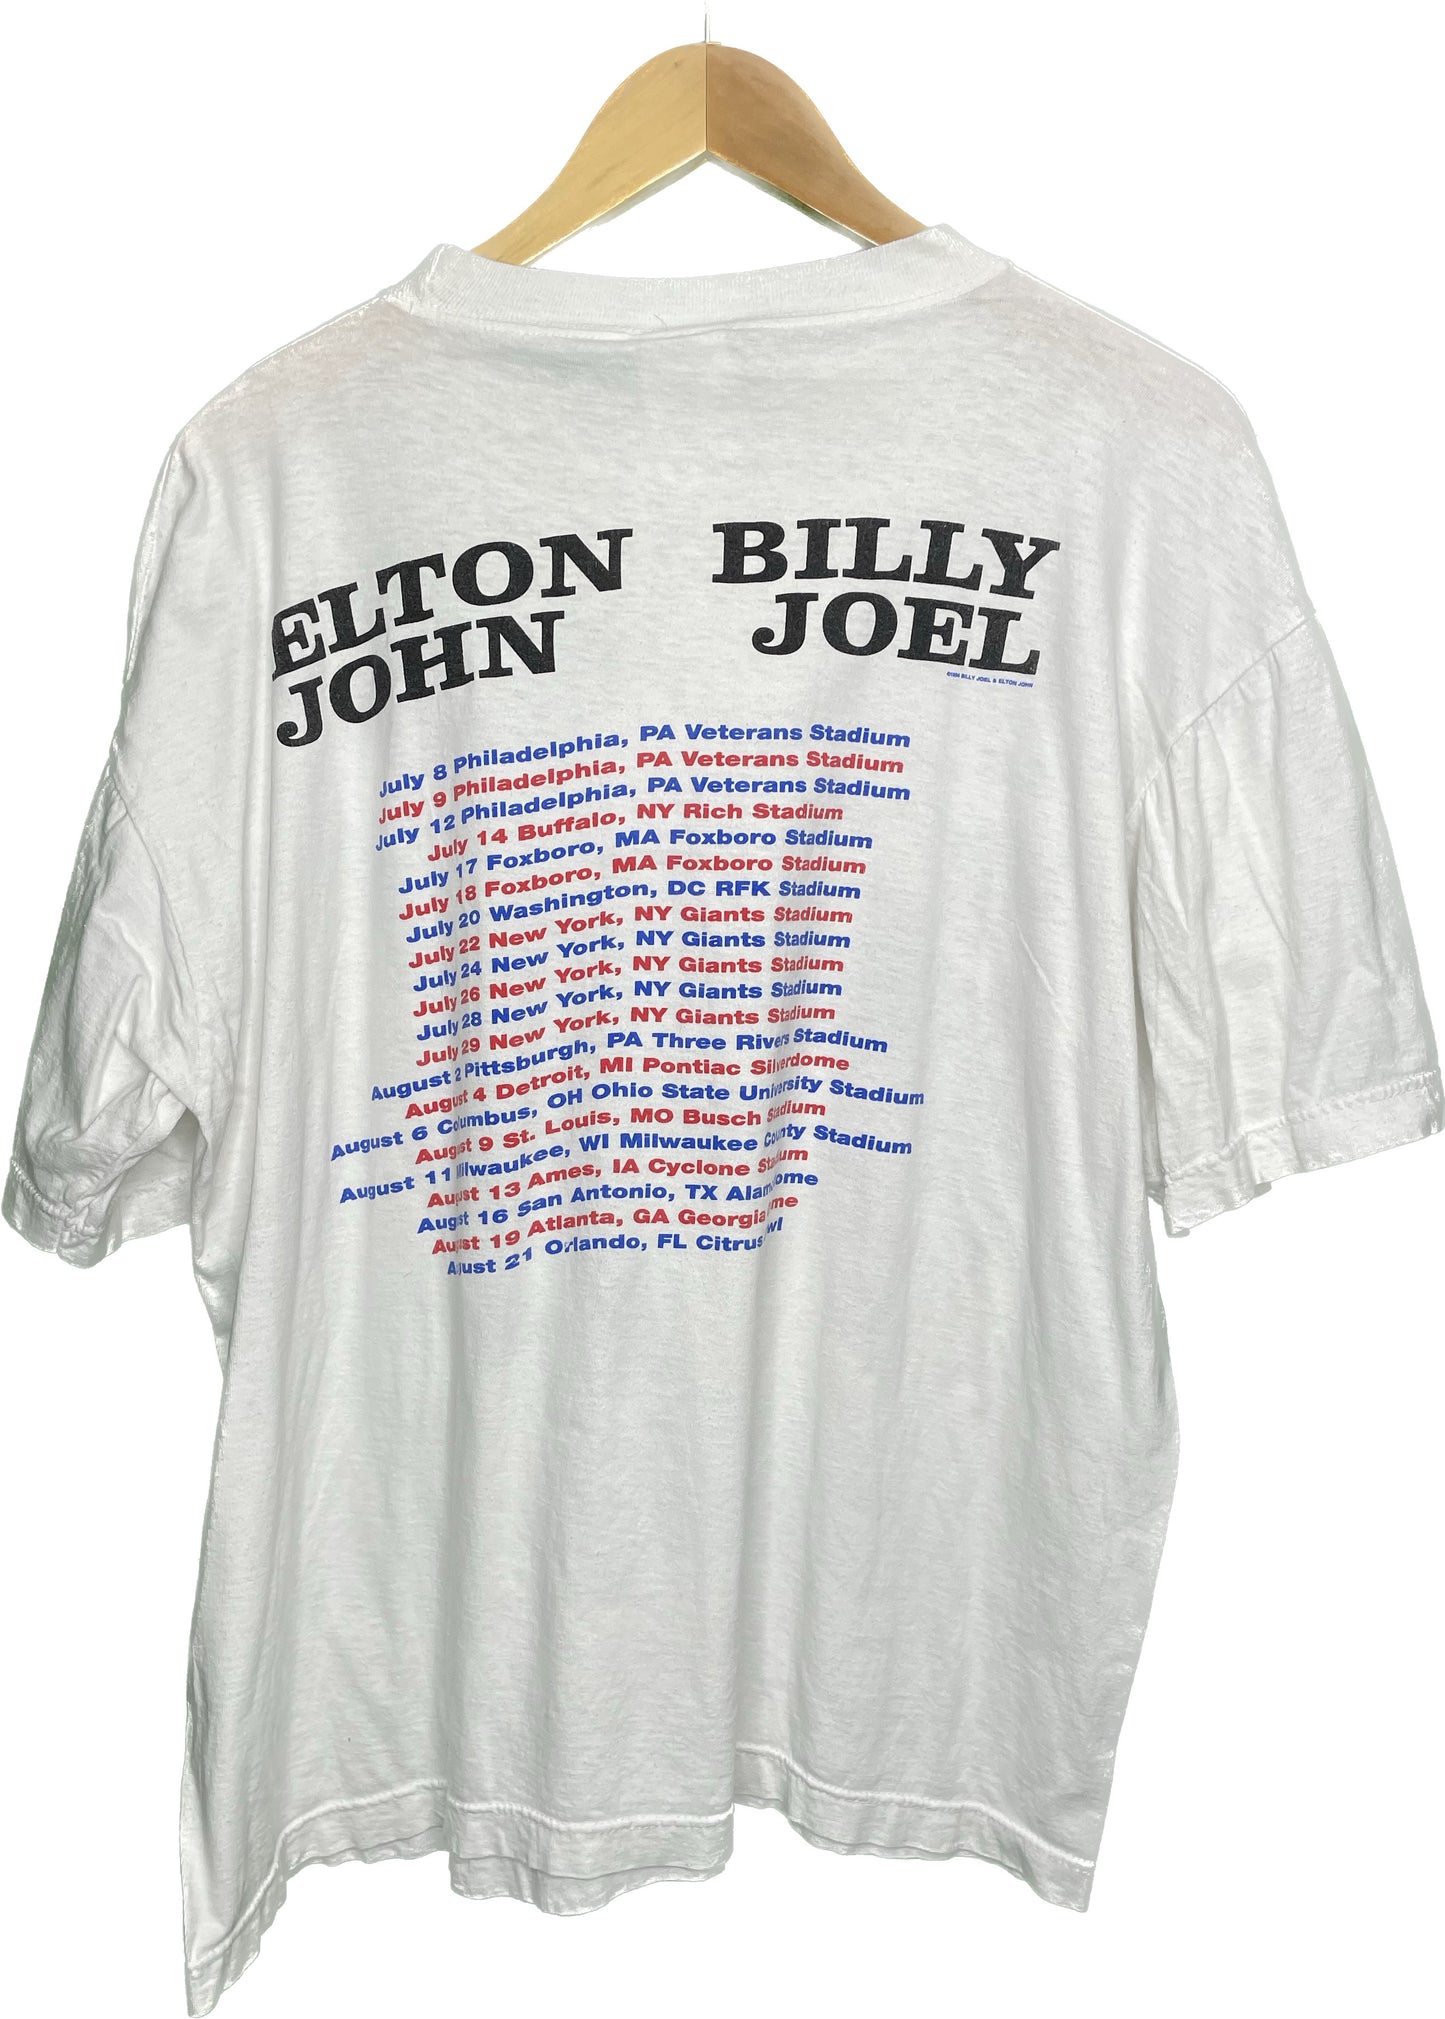 Vintage L/XL Elton John Billy Joel 1994 Tour Concert Shirt